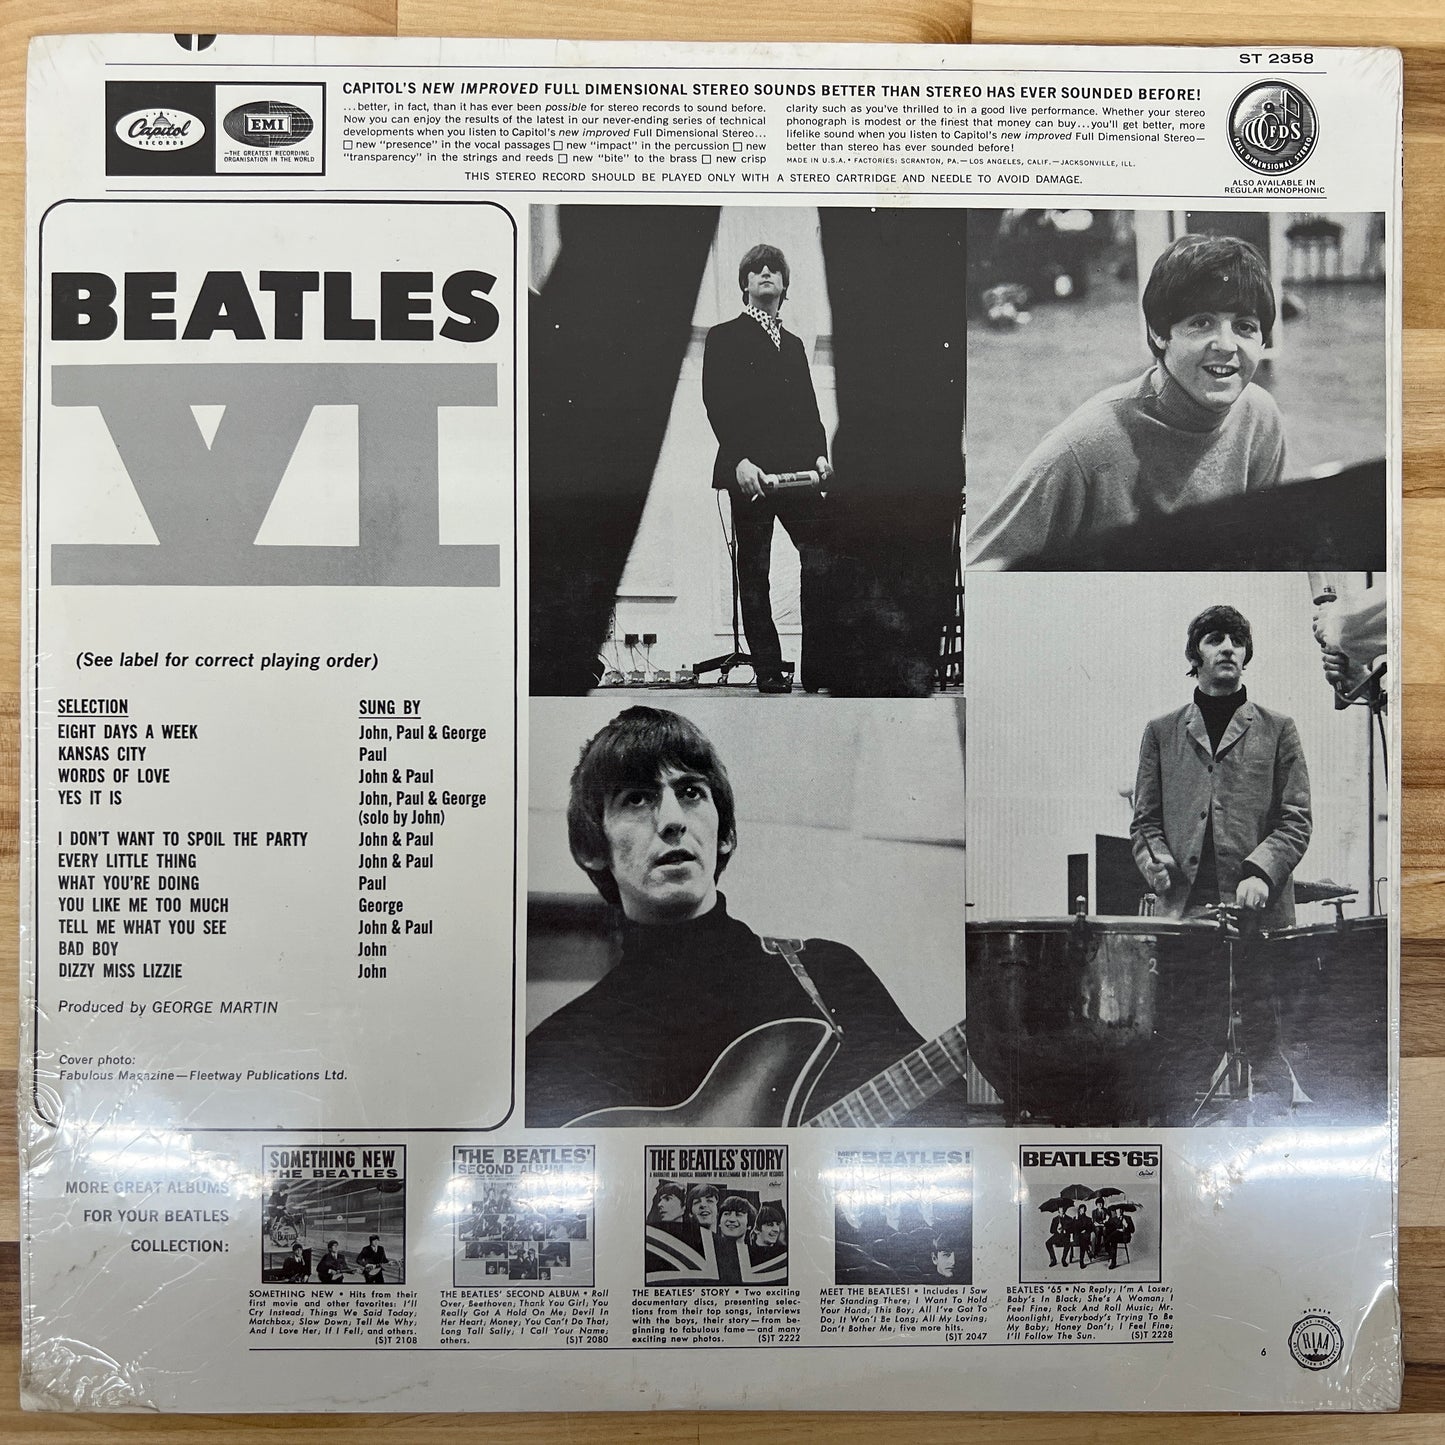 The Beatles - Beatles VI - LP